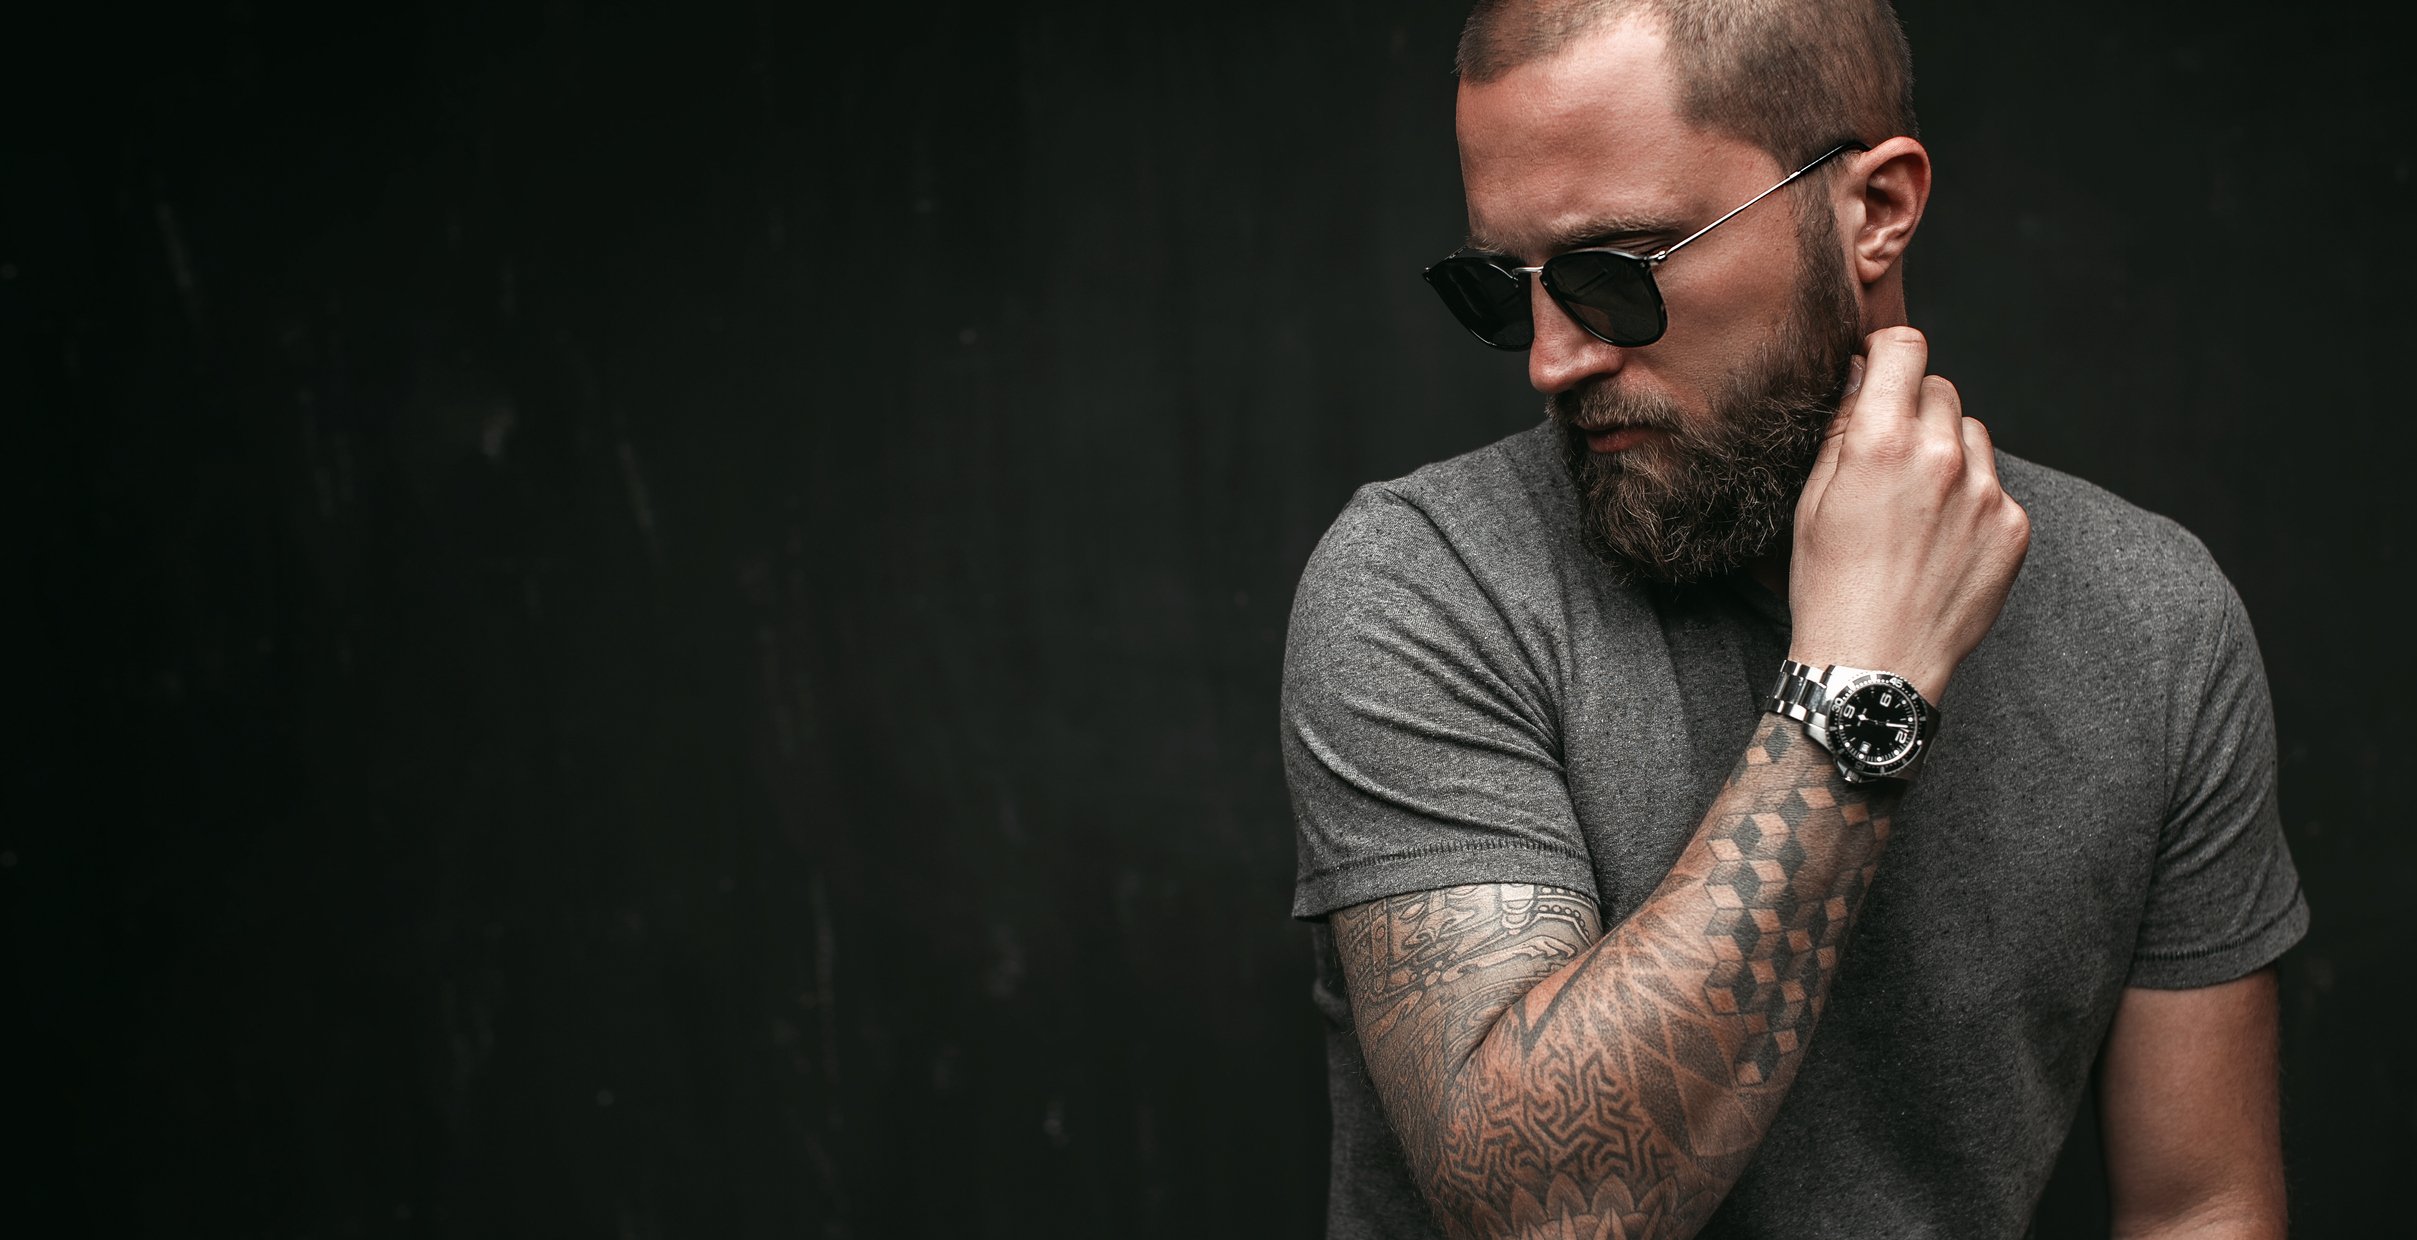 tattooed man wearing sunglasses indoors